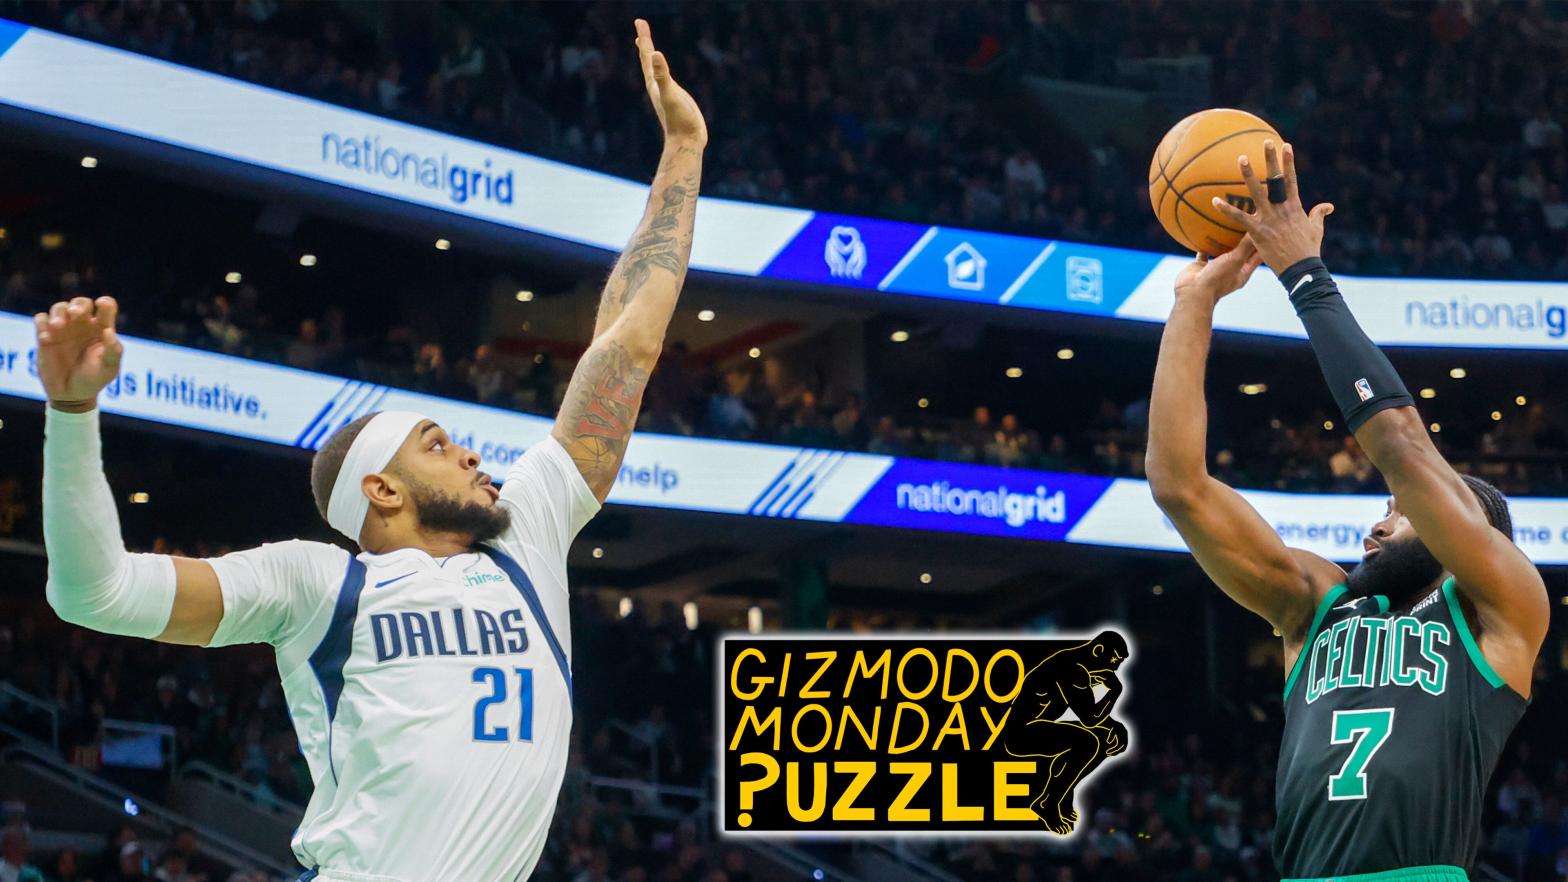 Gizmodo Monday Puzzle: Can You Rig the NBA Finals?